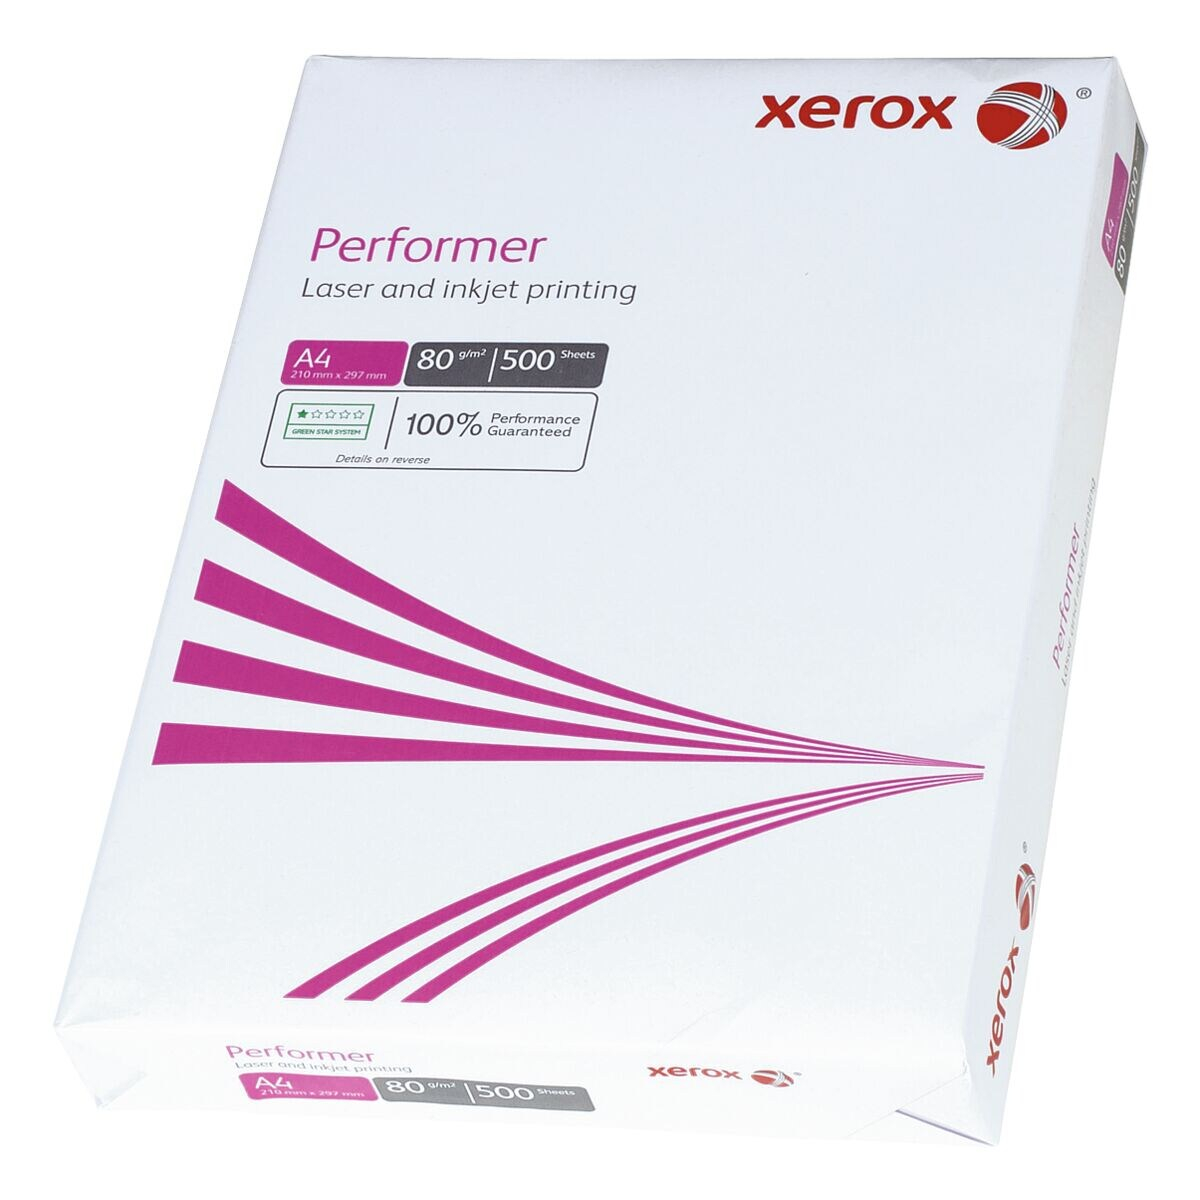 Бумага Xerox performer a4